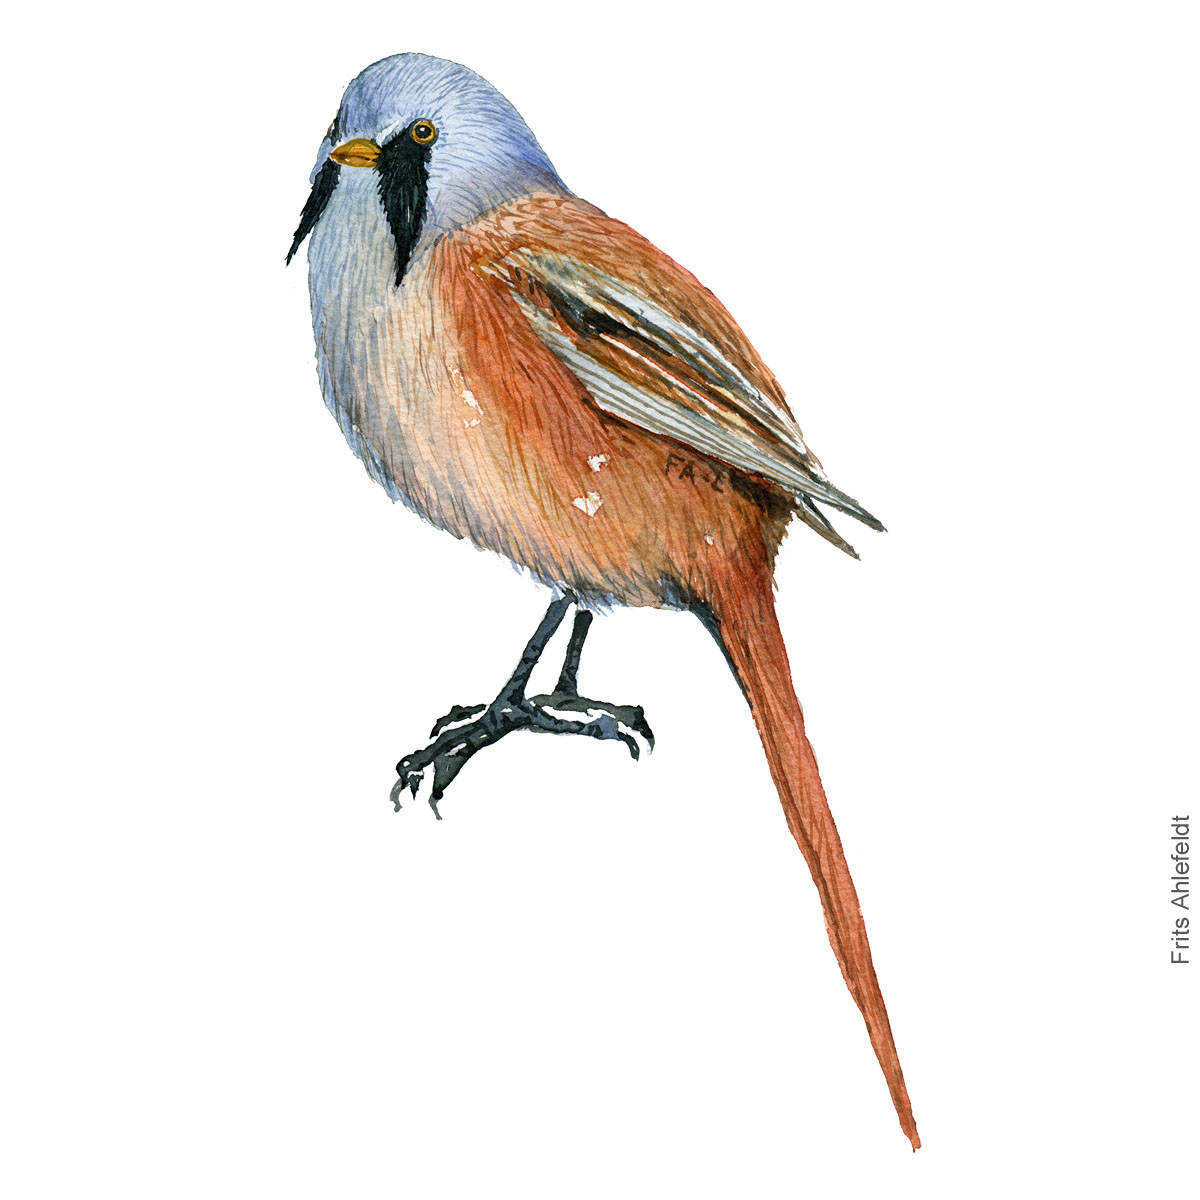 Bearded reedling - Skaegmejse Akvarel. Watercolor bird illustration by Frits Ahlefeldt